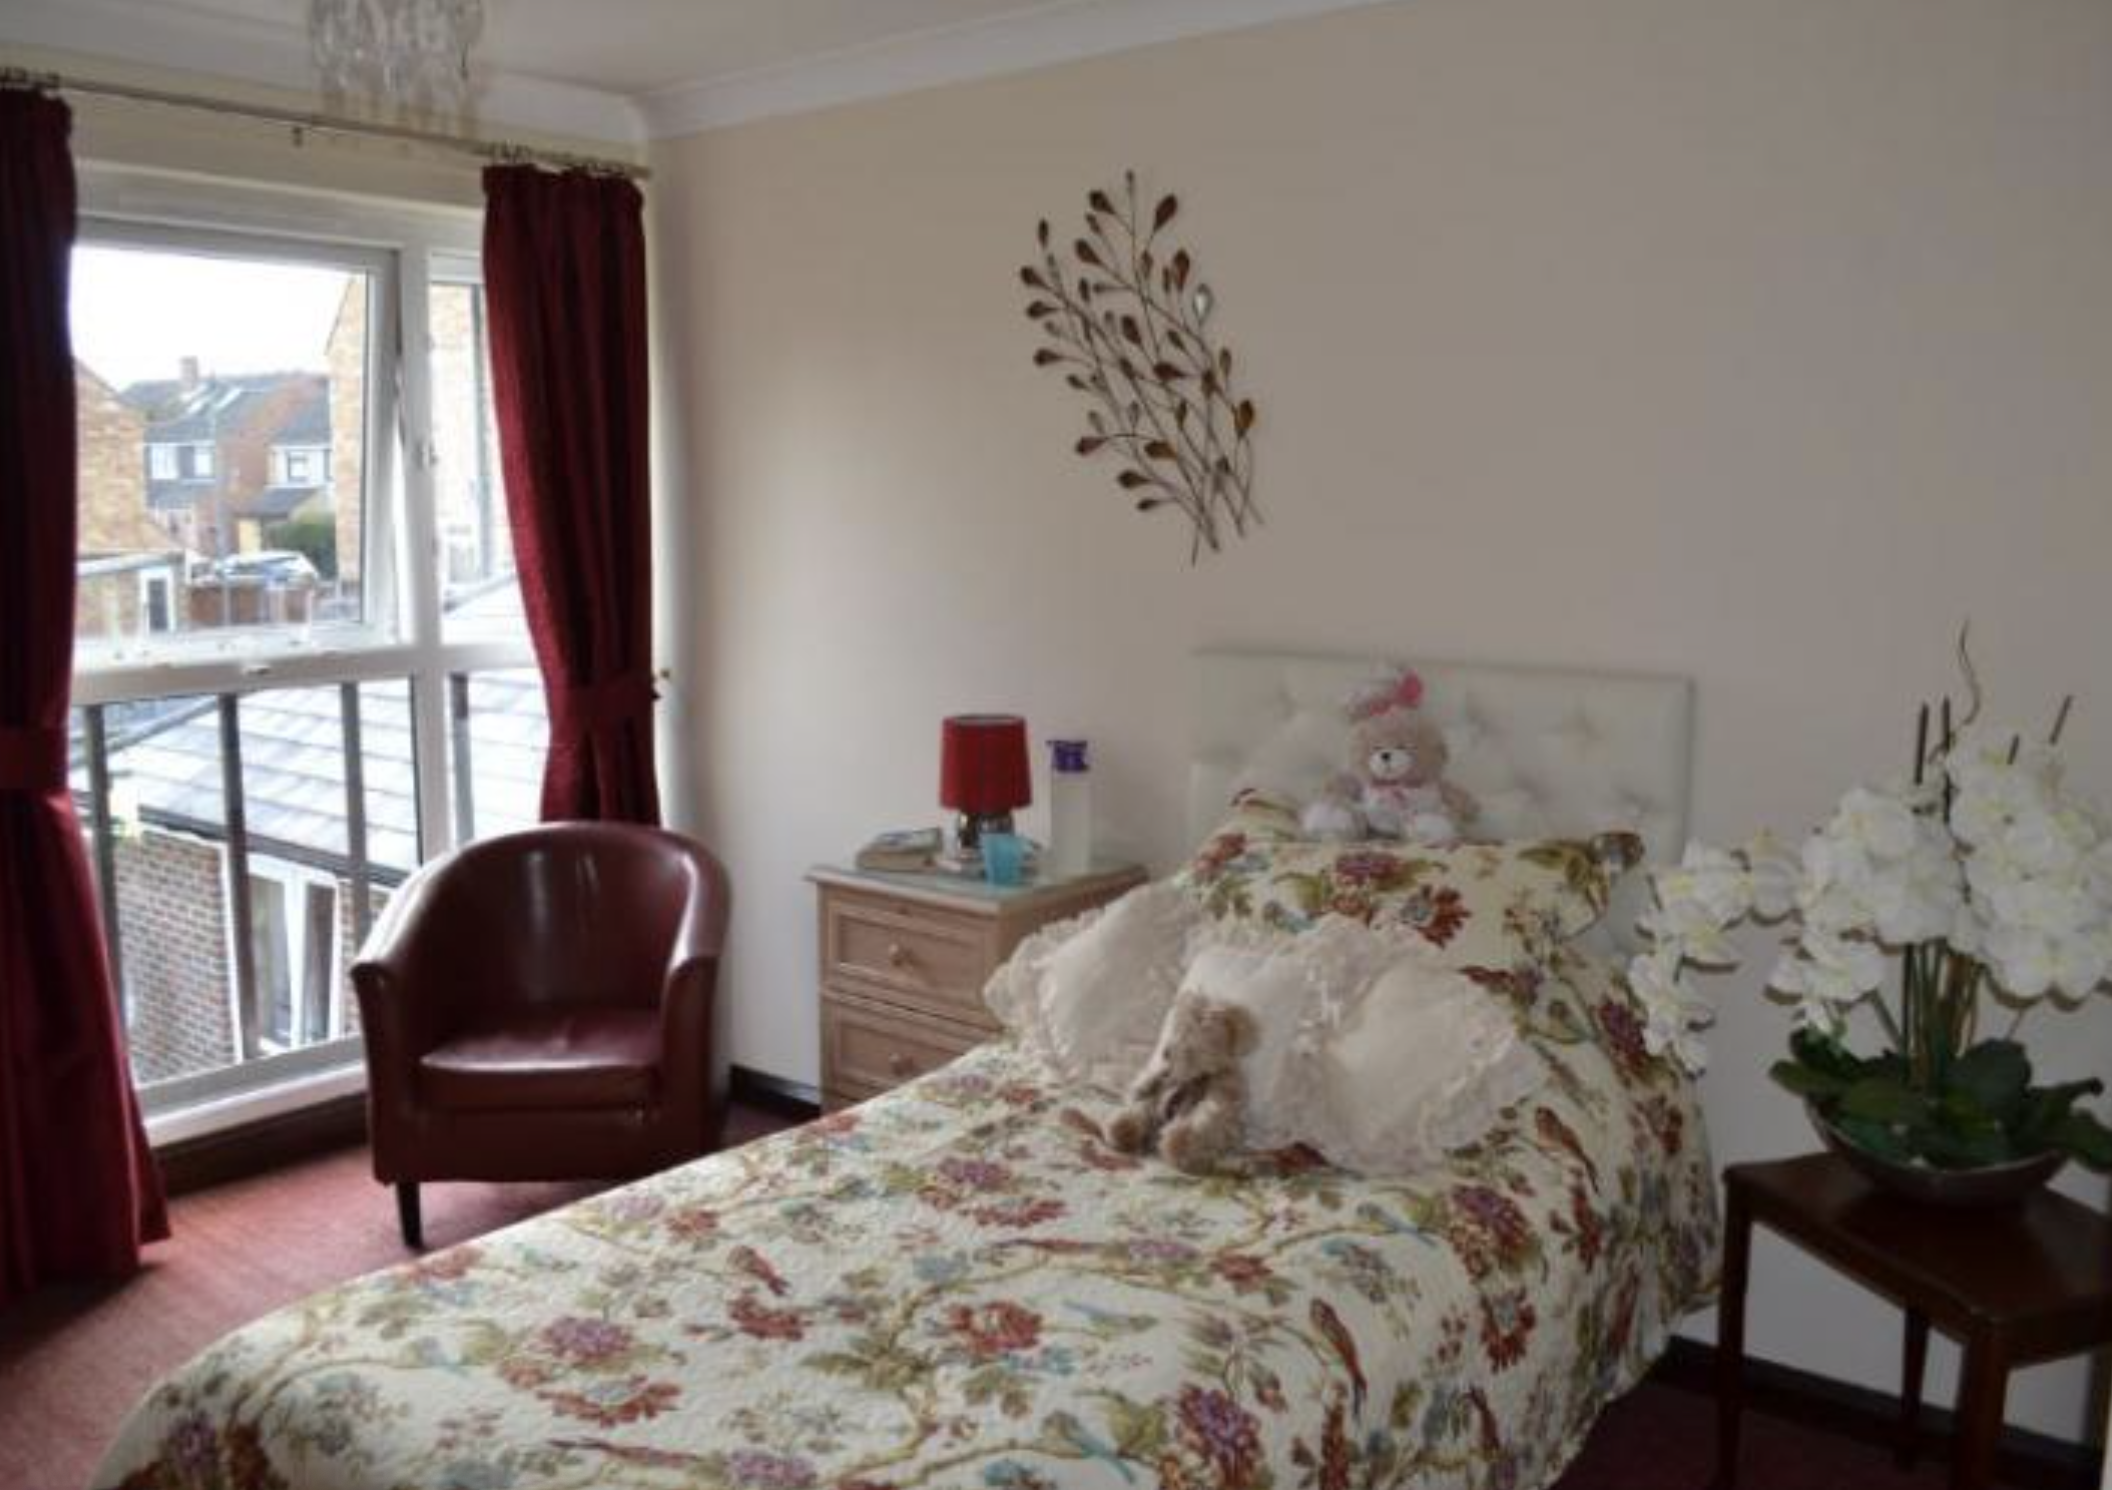 Bedroom of Pine Lodge care home in Sittingbourne, Kent